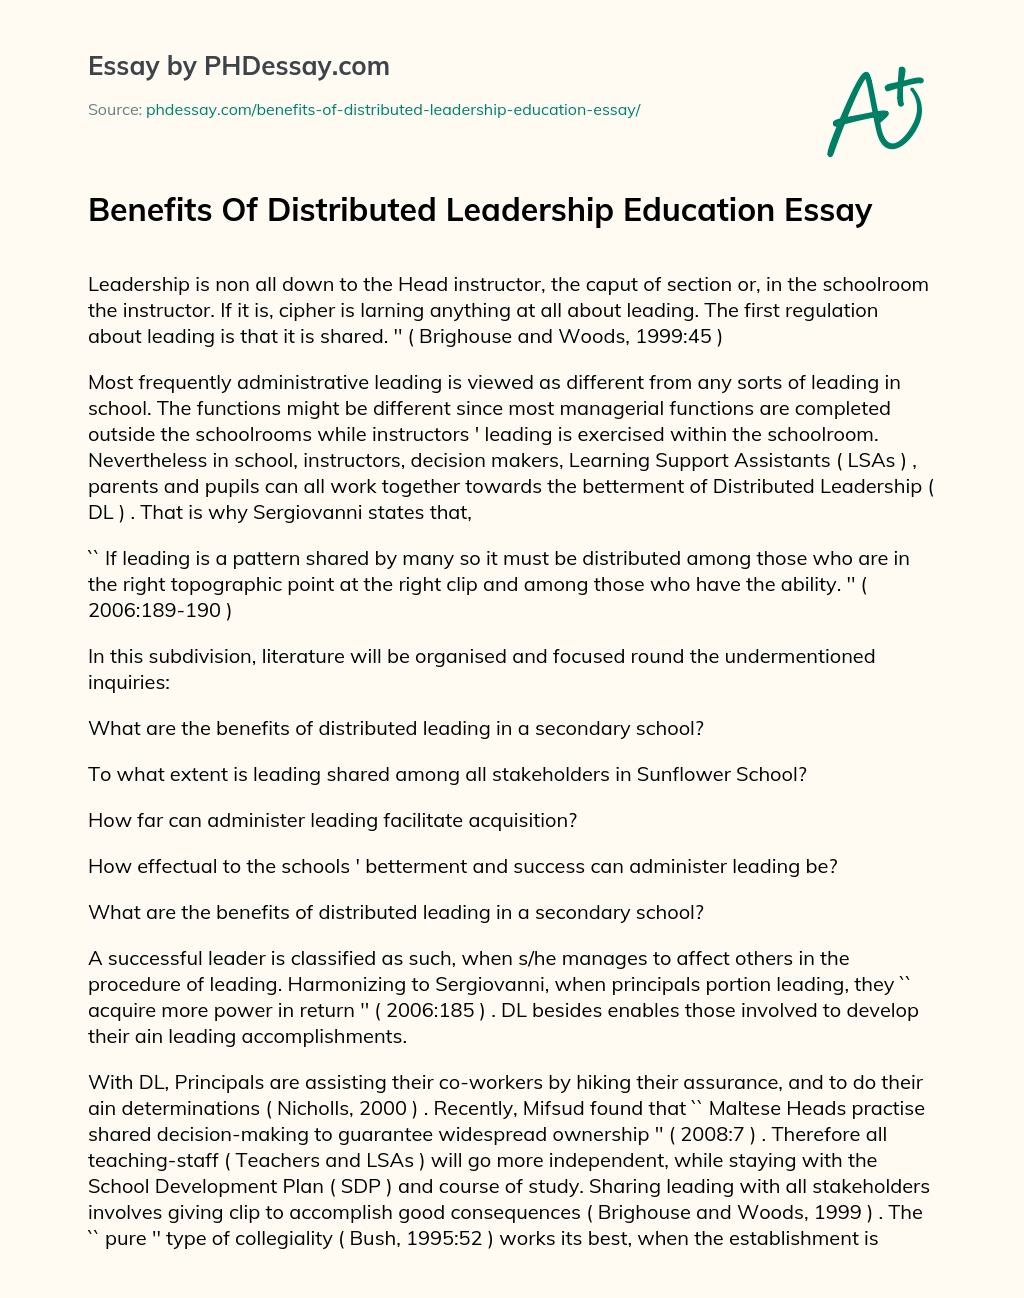 Benefits Of Distributed Leadership Education Essay essay